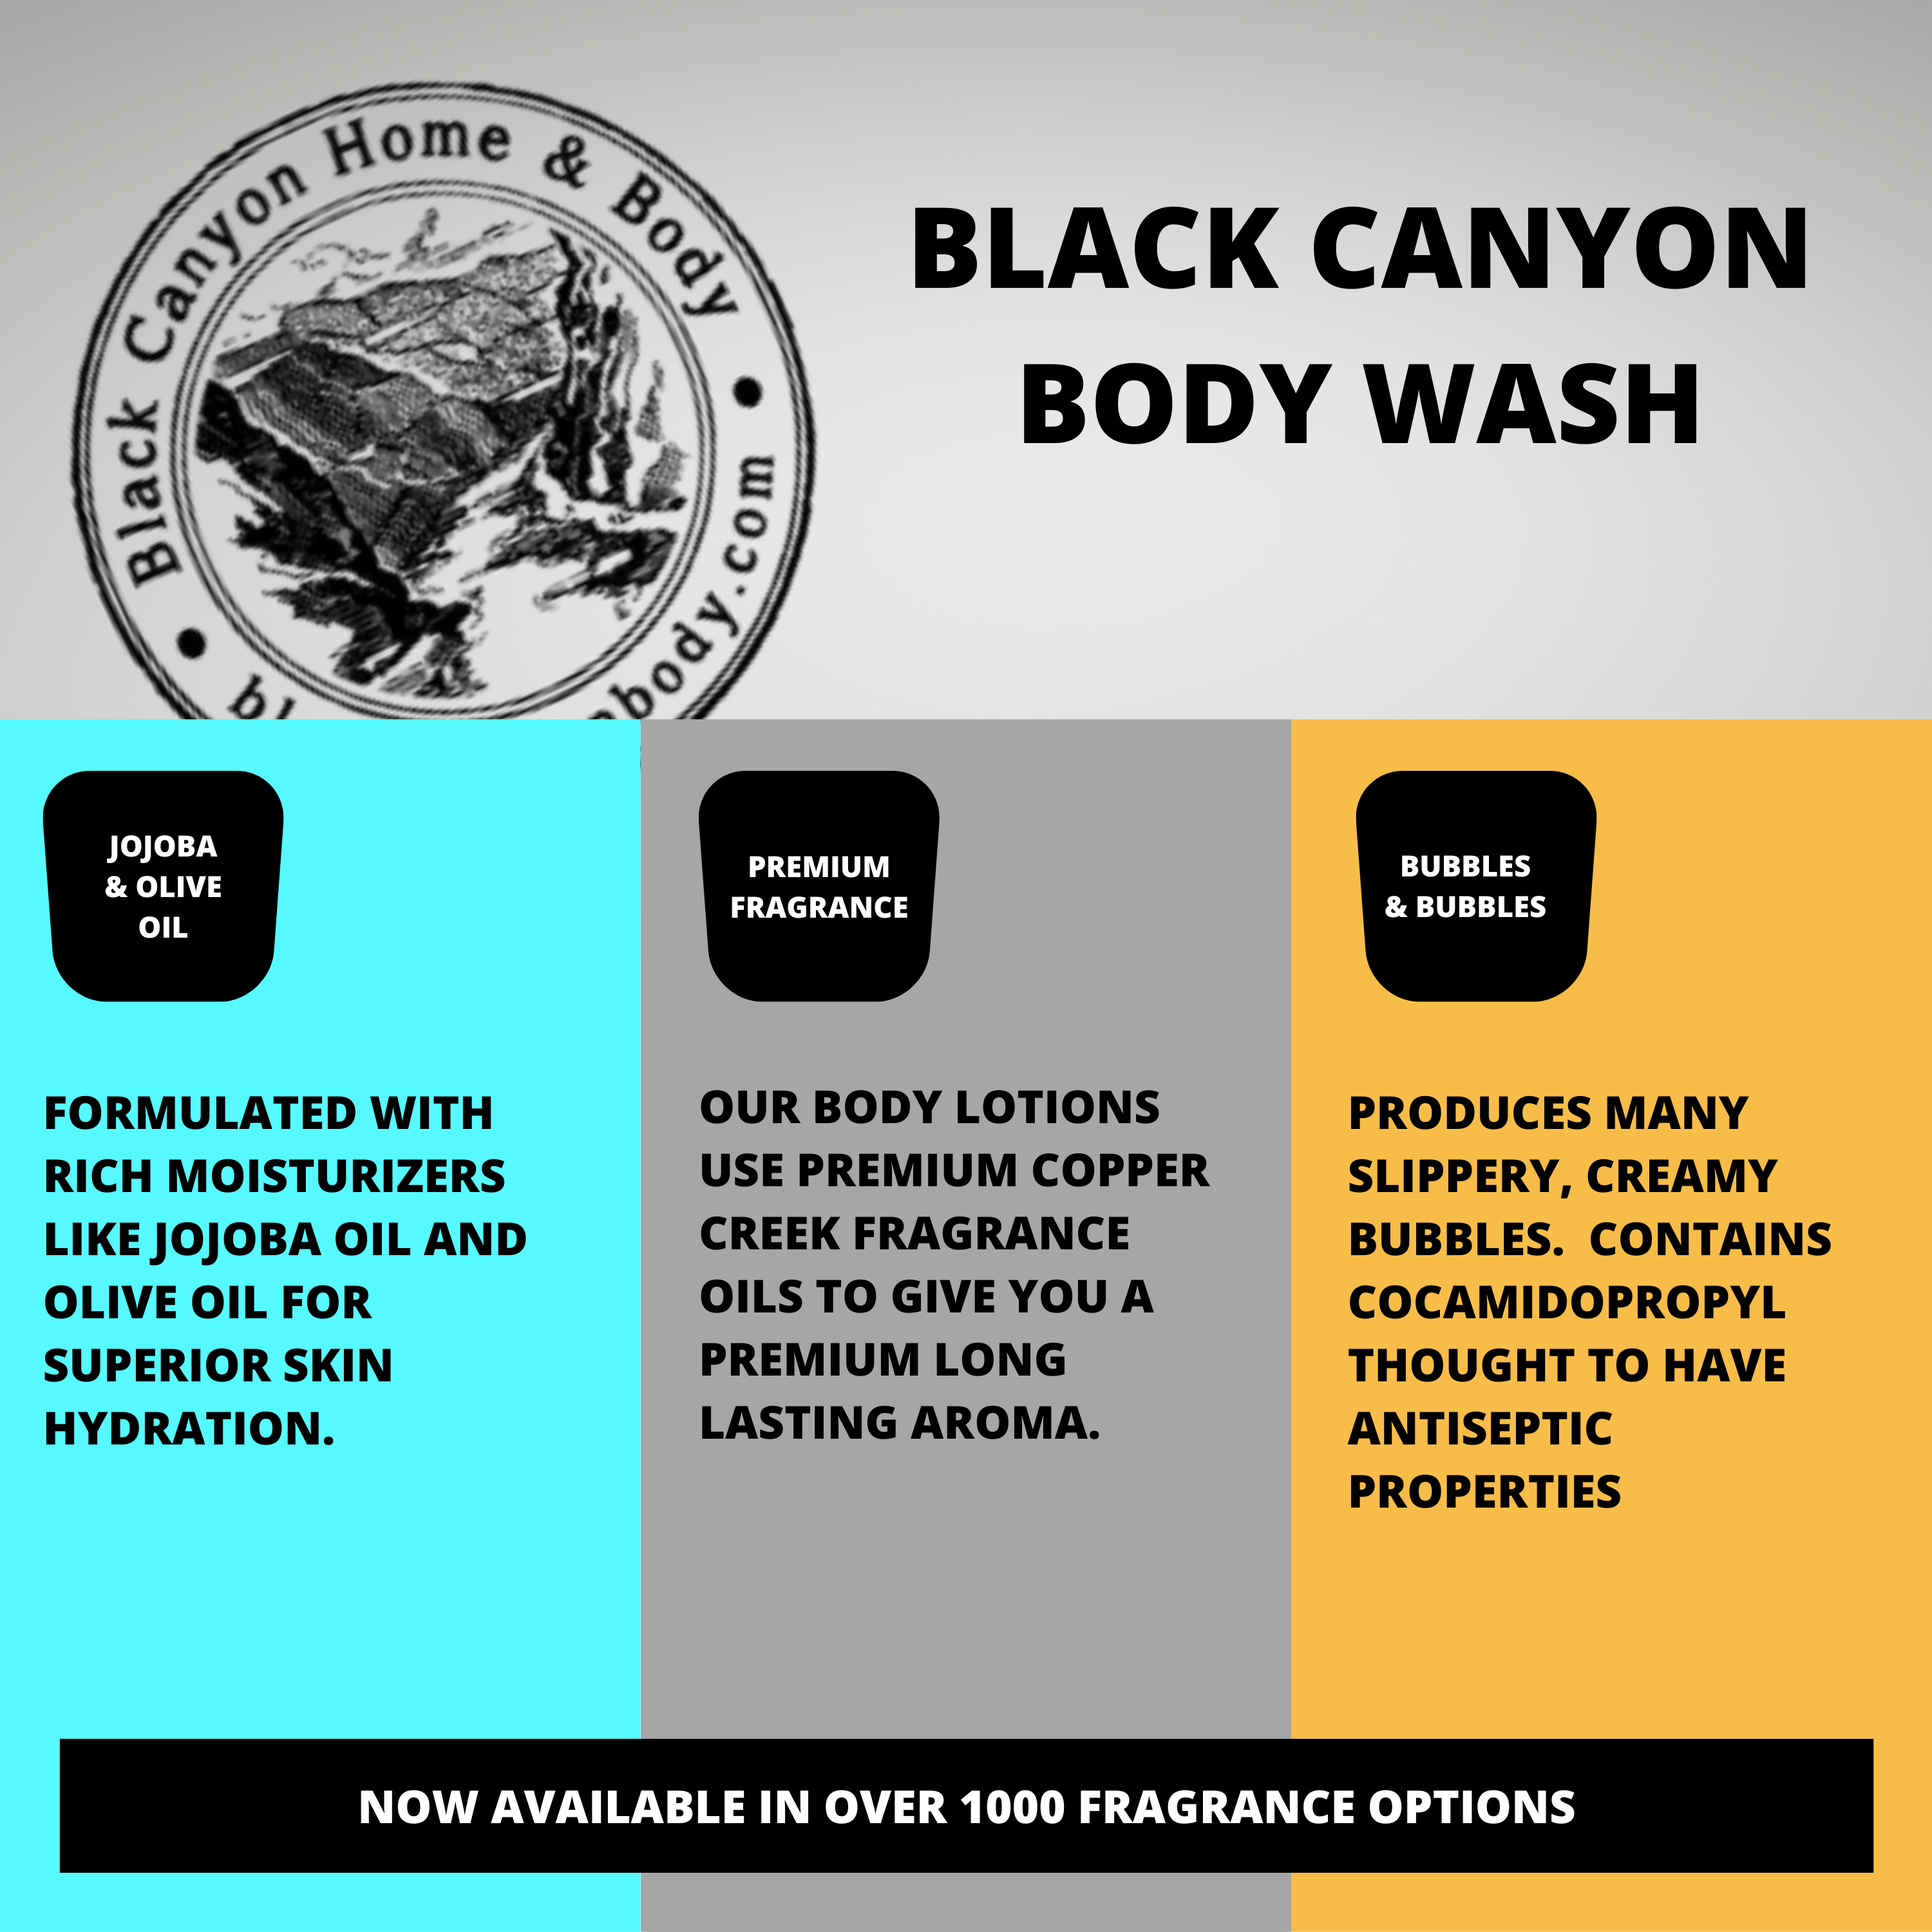 Black Canyon Wild Blueberry Vanilla Scented Luxury Body Wash